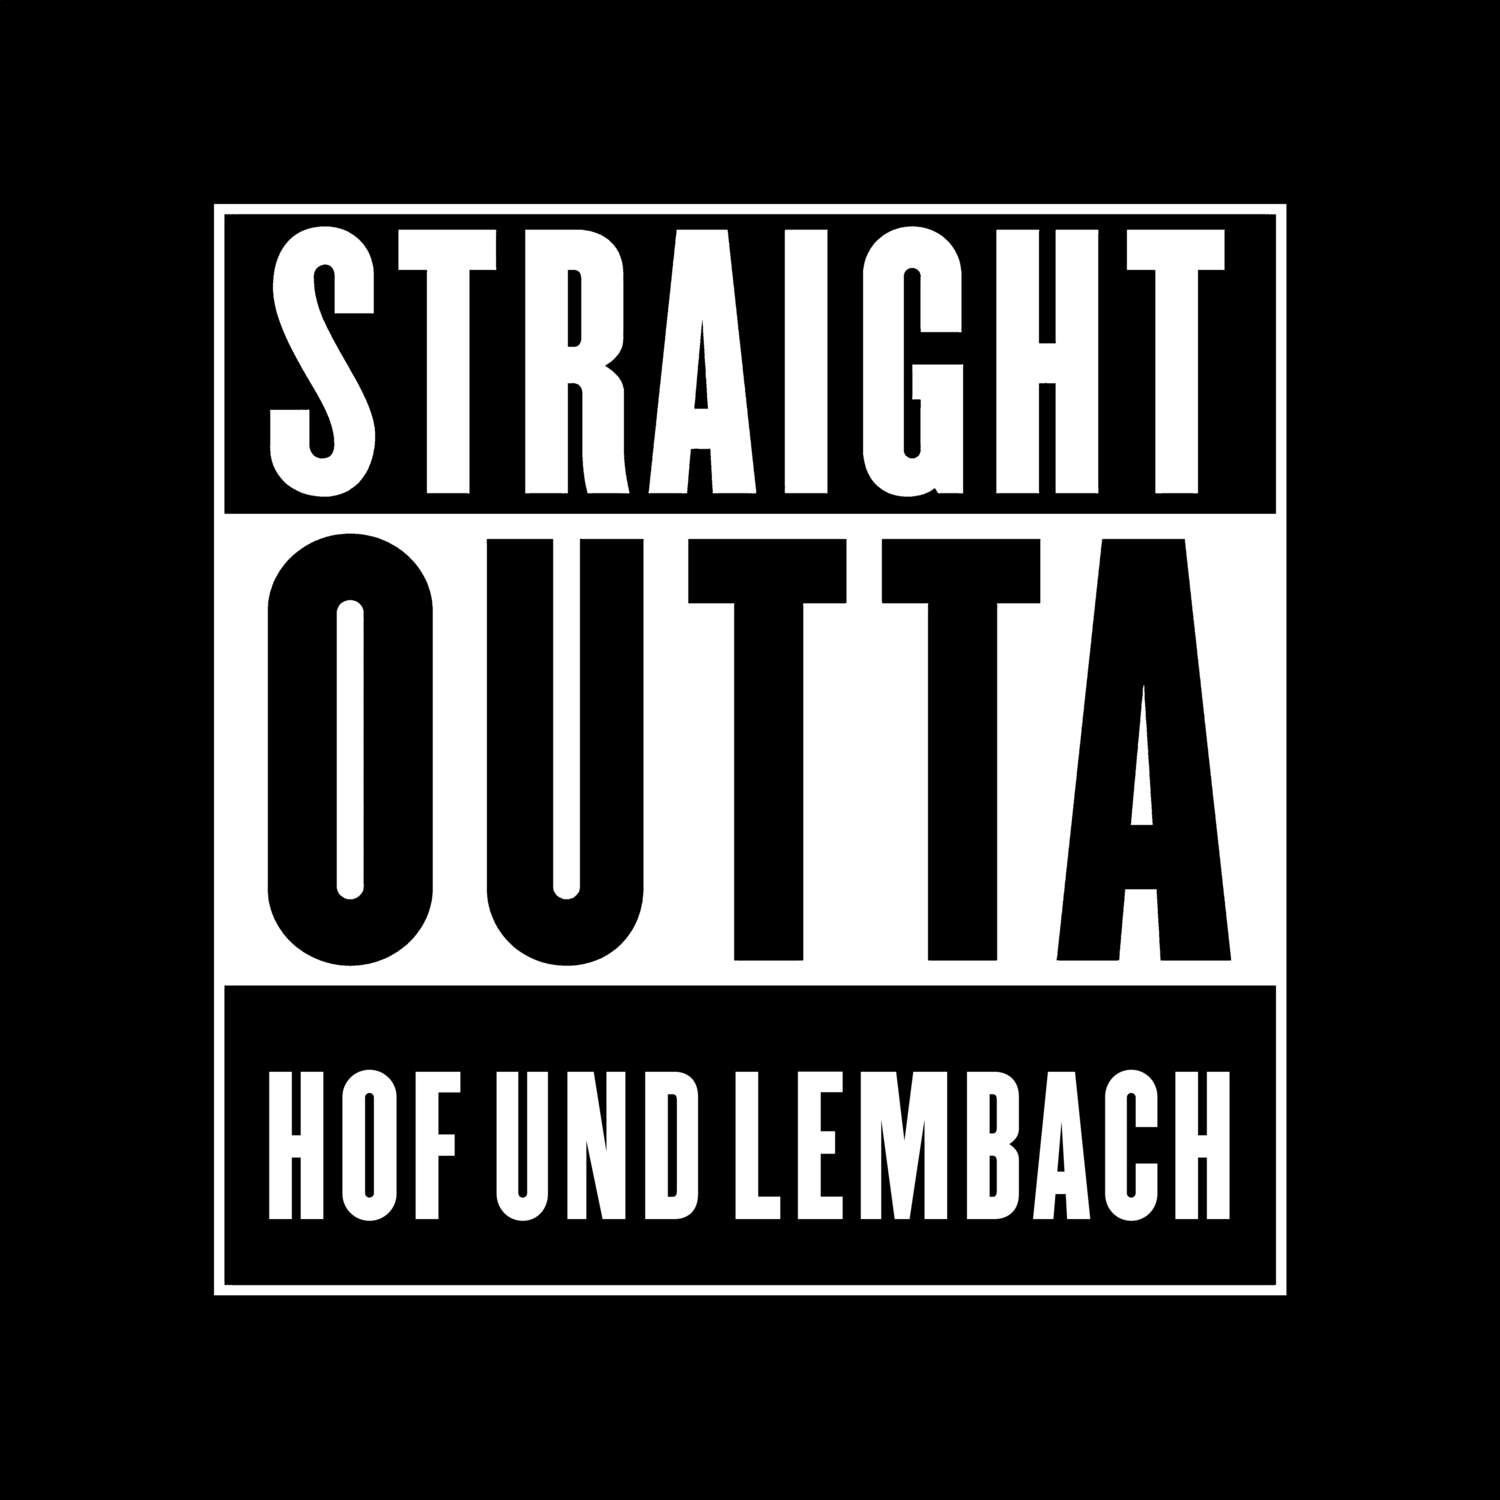 Hof und Lembach T-Shirt »Straight Outta«